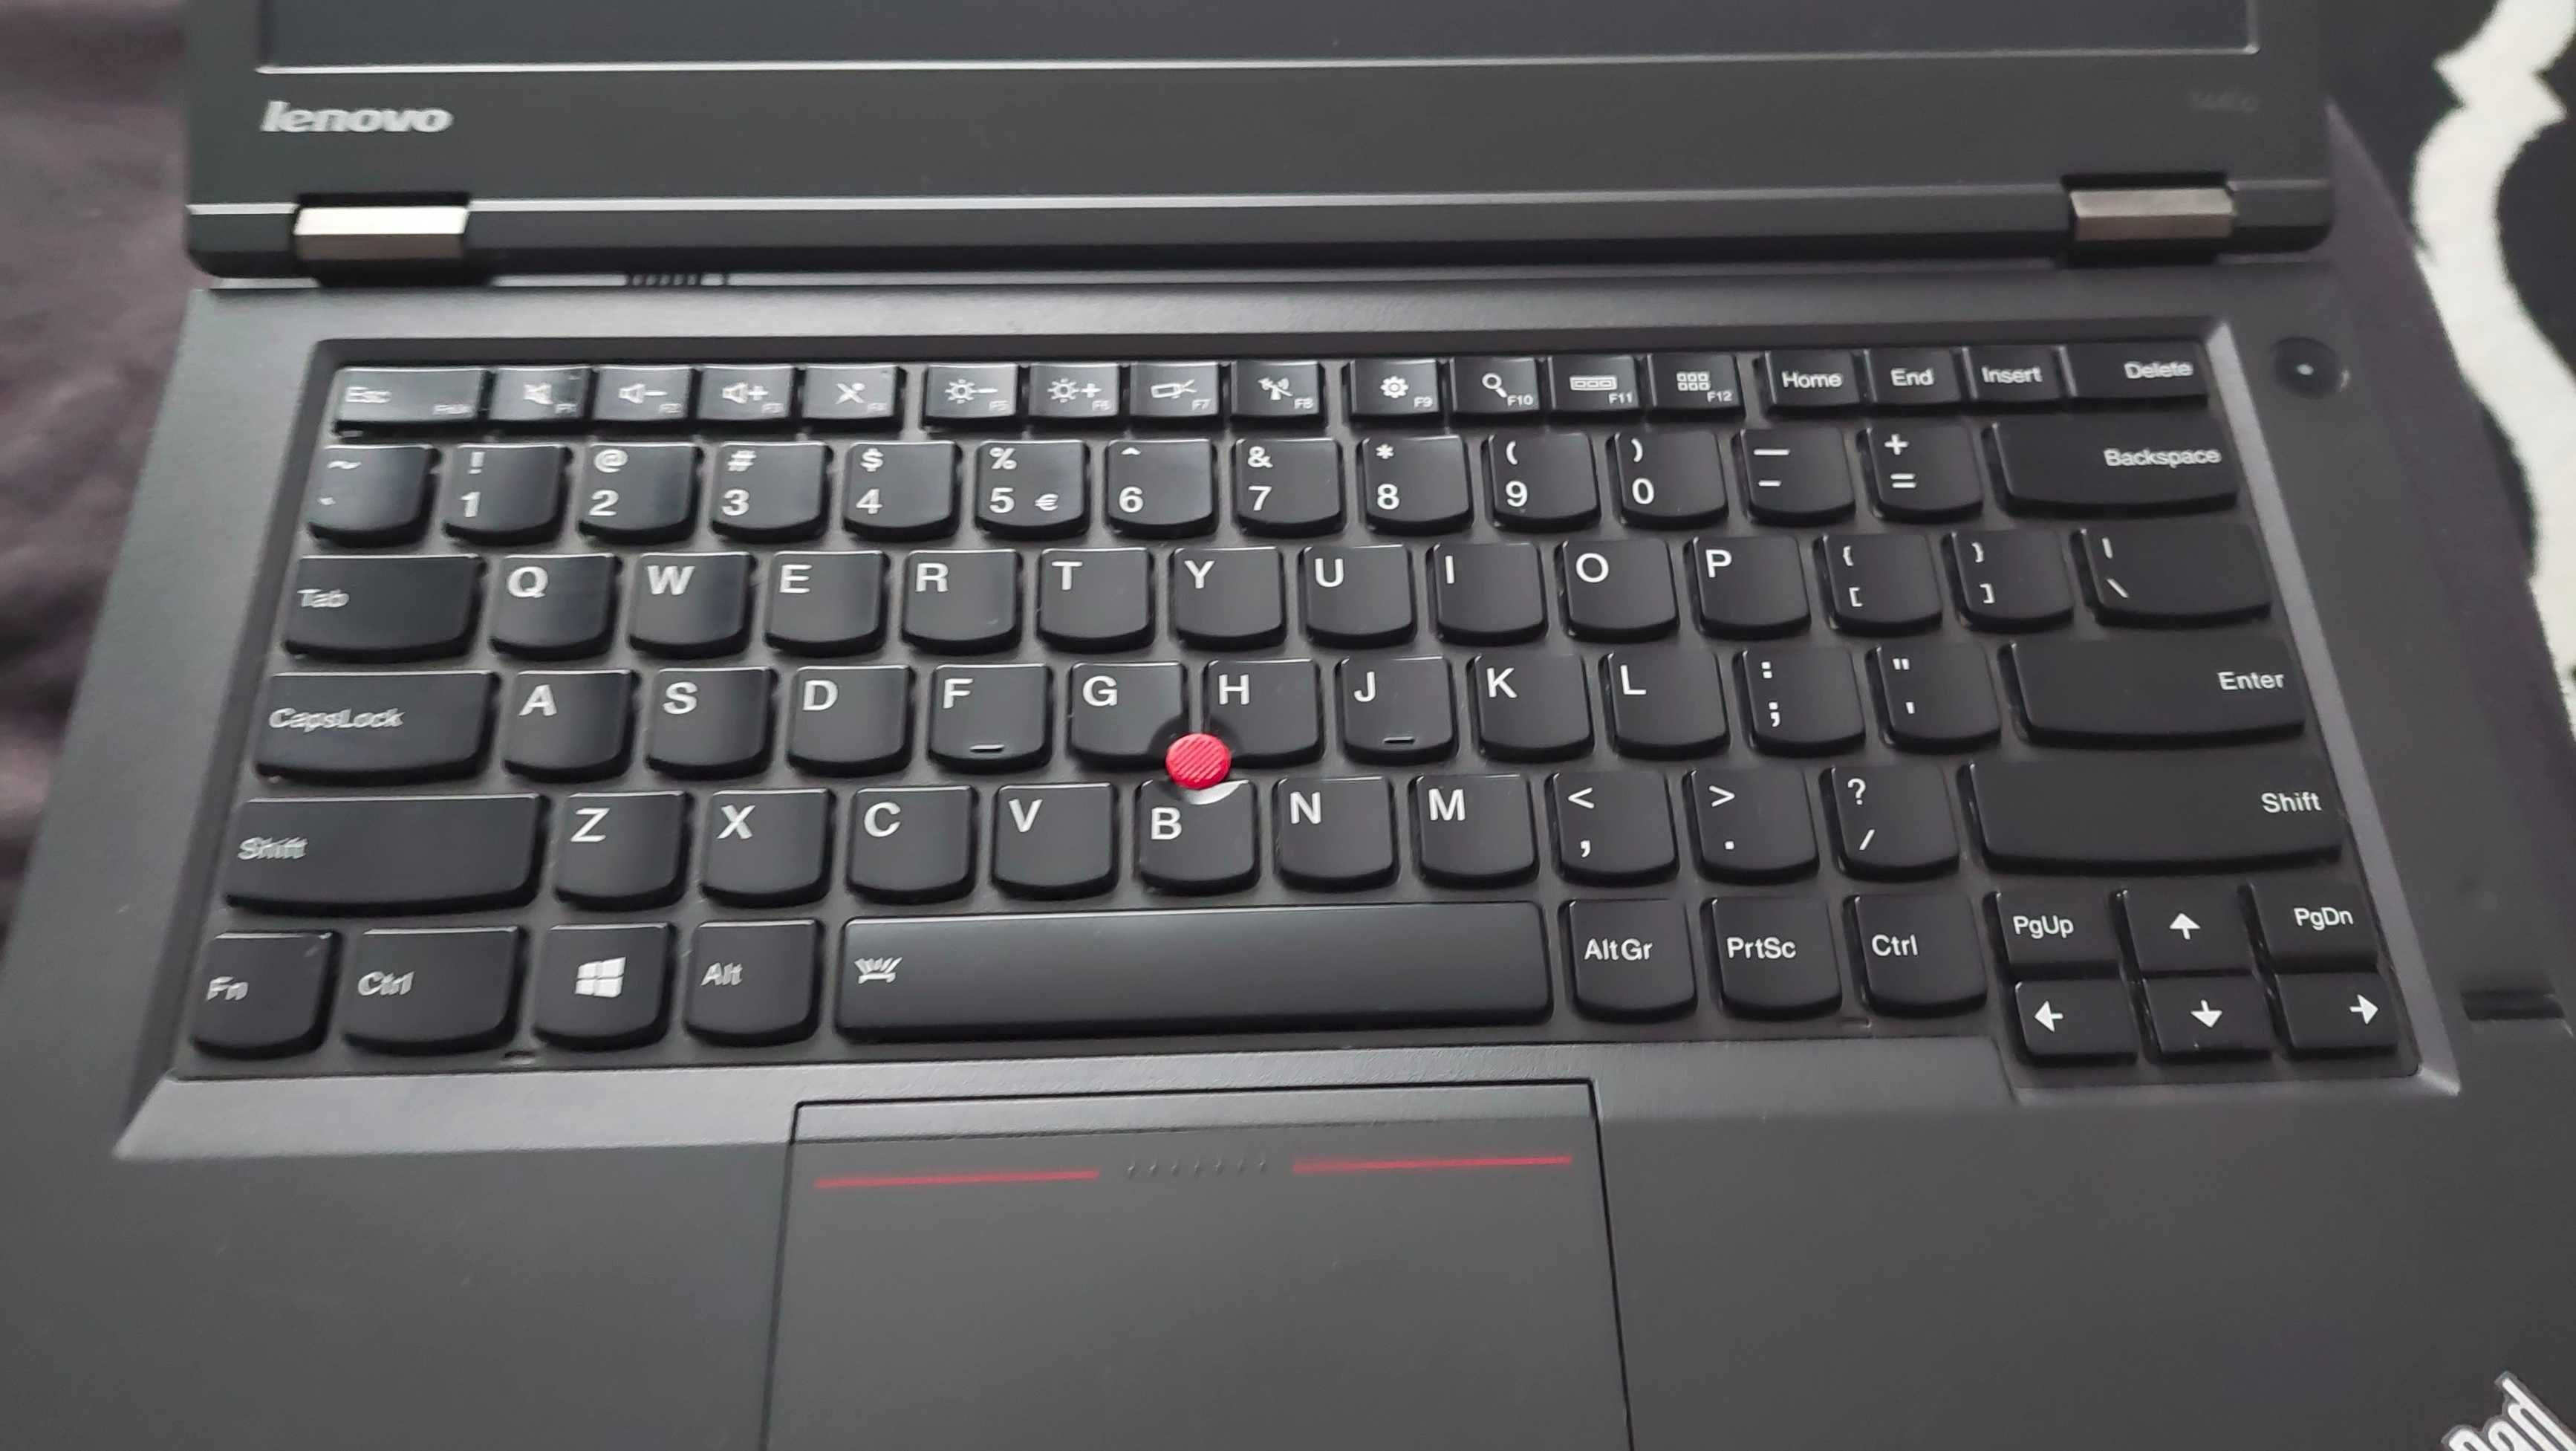 Lenovo ThinkPad T440p i7-4800MQ 16GB RAM 240GB SSD FullHD